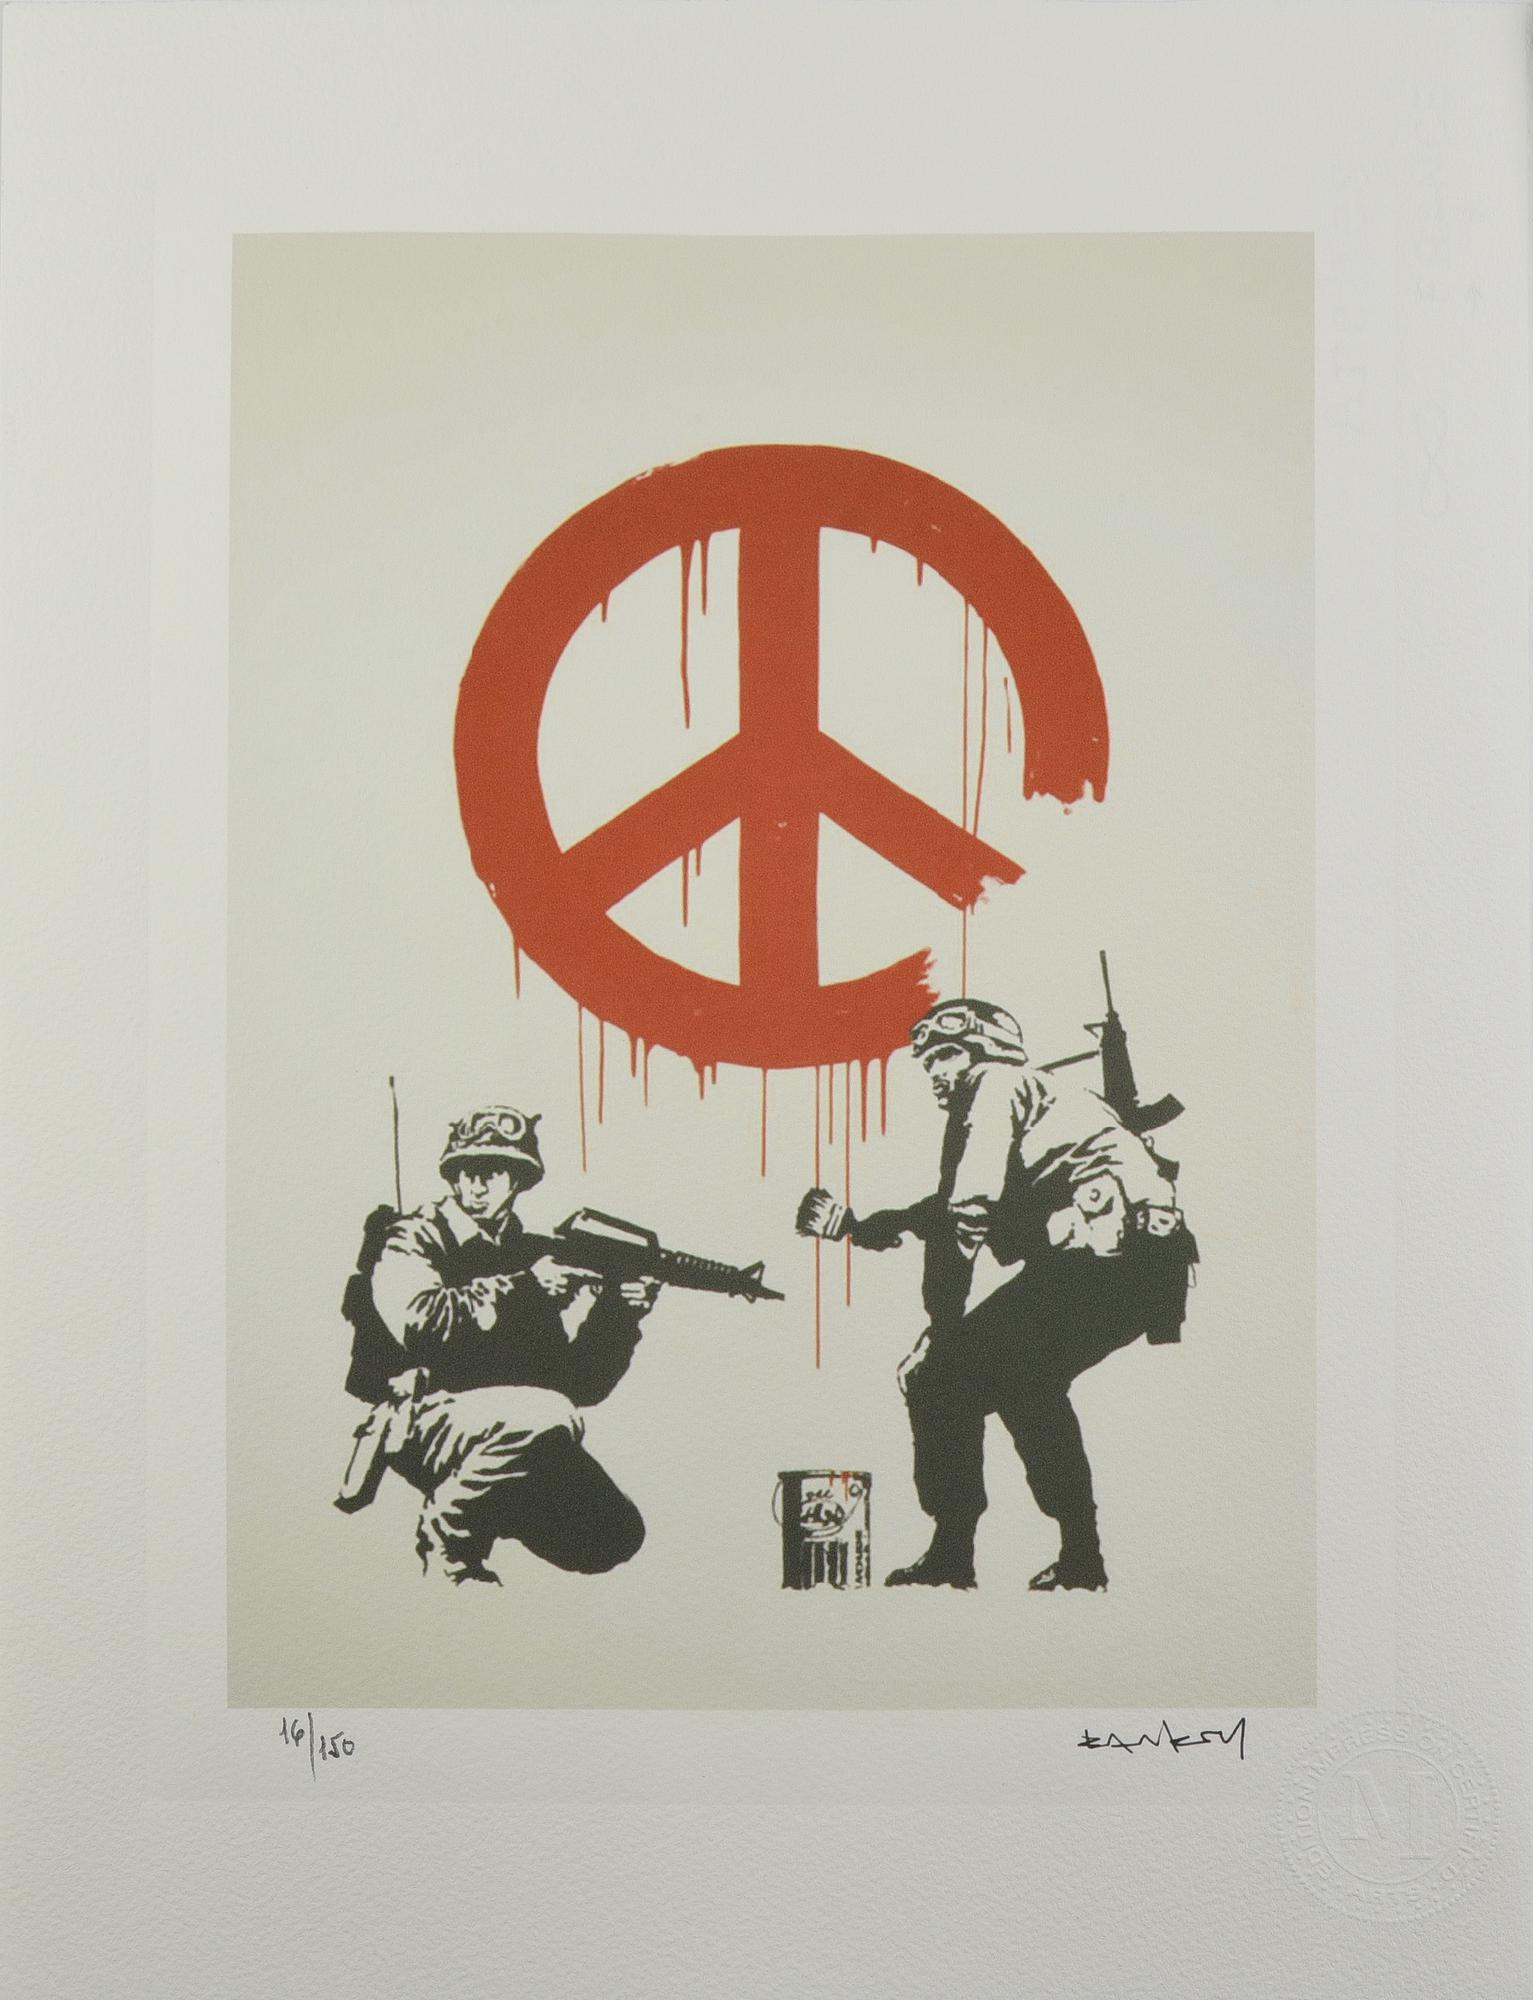 Da Banksy CND SOLDIERS 2005 eliografia su carta, cm 38,5x28,5; es. 16/150...